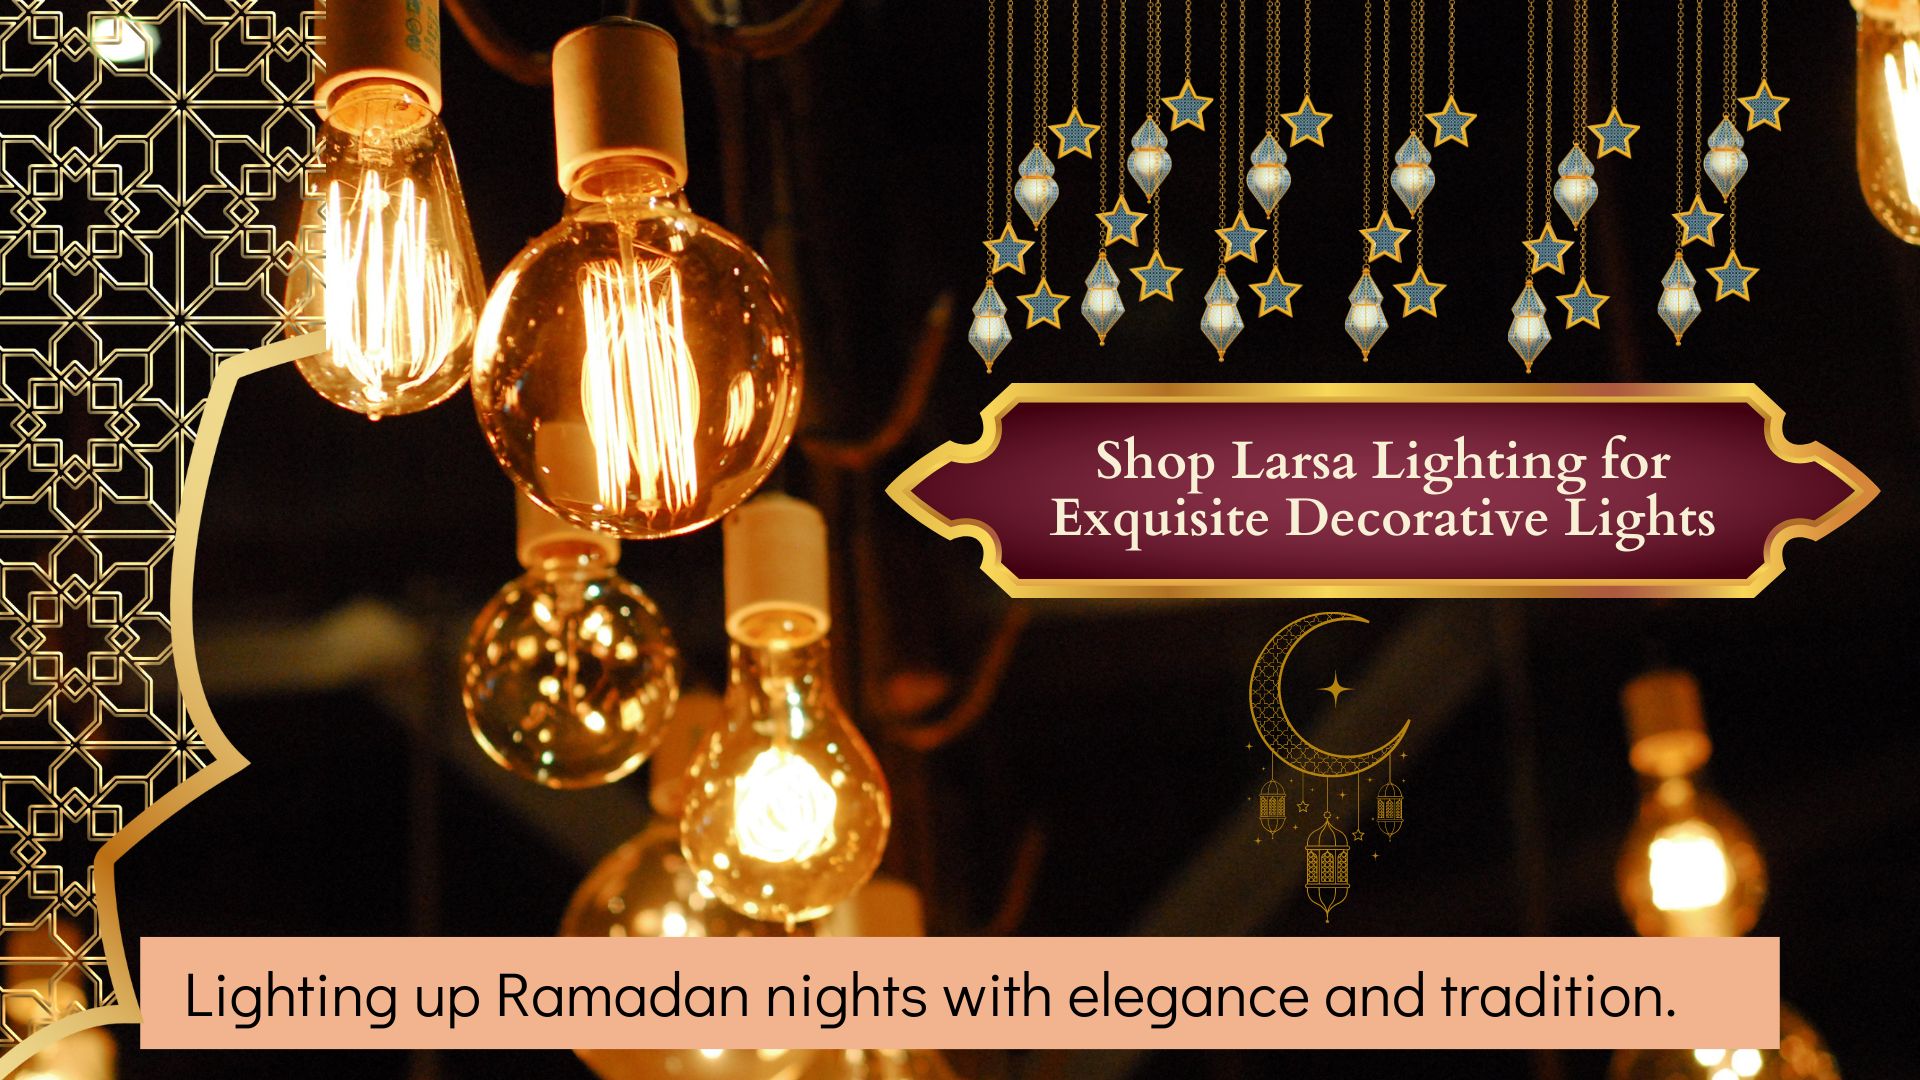 Light Up Ramadan Nights Top Decorative Lights in UAE